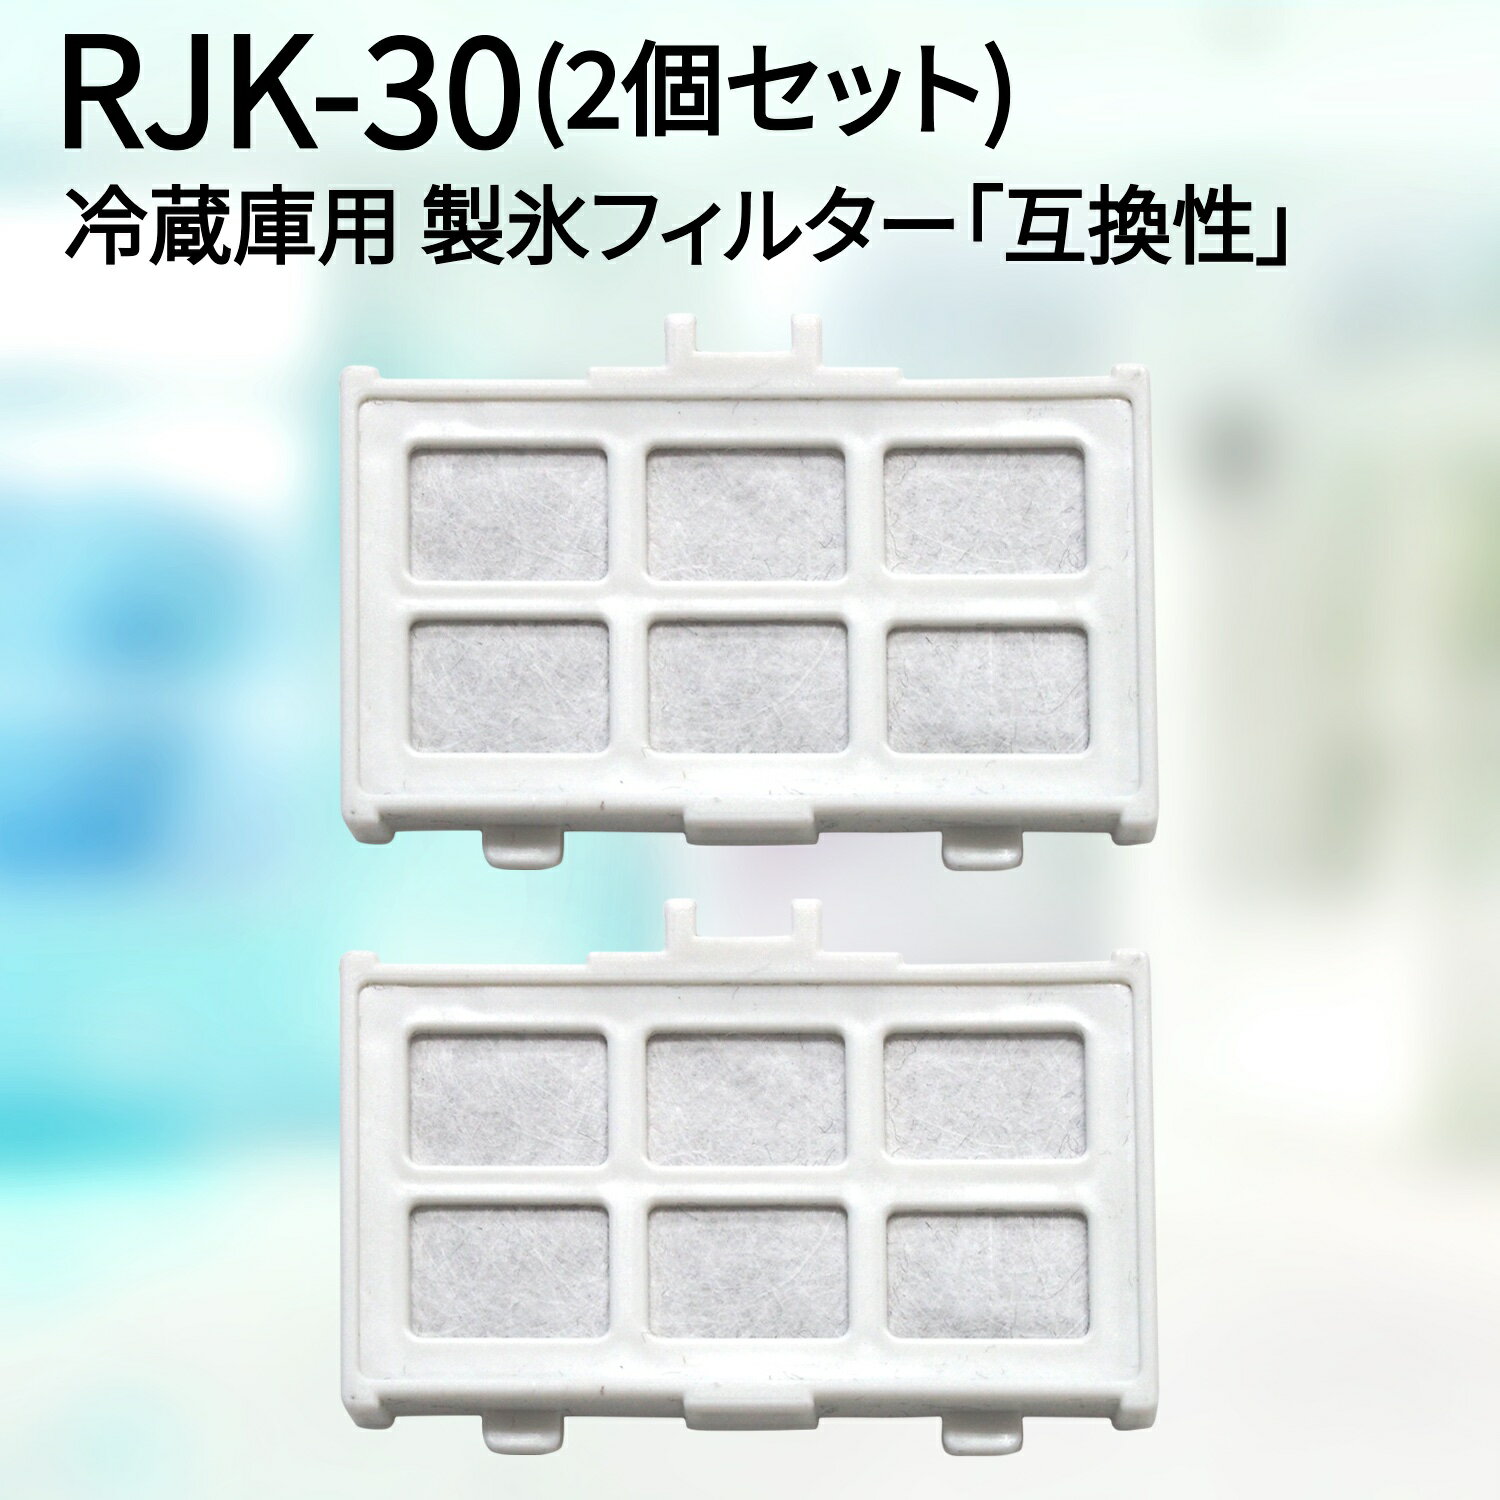 RJK-30 【国内検査済み】 冷蔵庫 浄水フィルター rjk30 日立冷凍冷蔵庫 自動製氷用 フィルター (互換品/2個入り）RJK-30-100